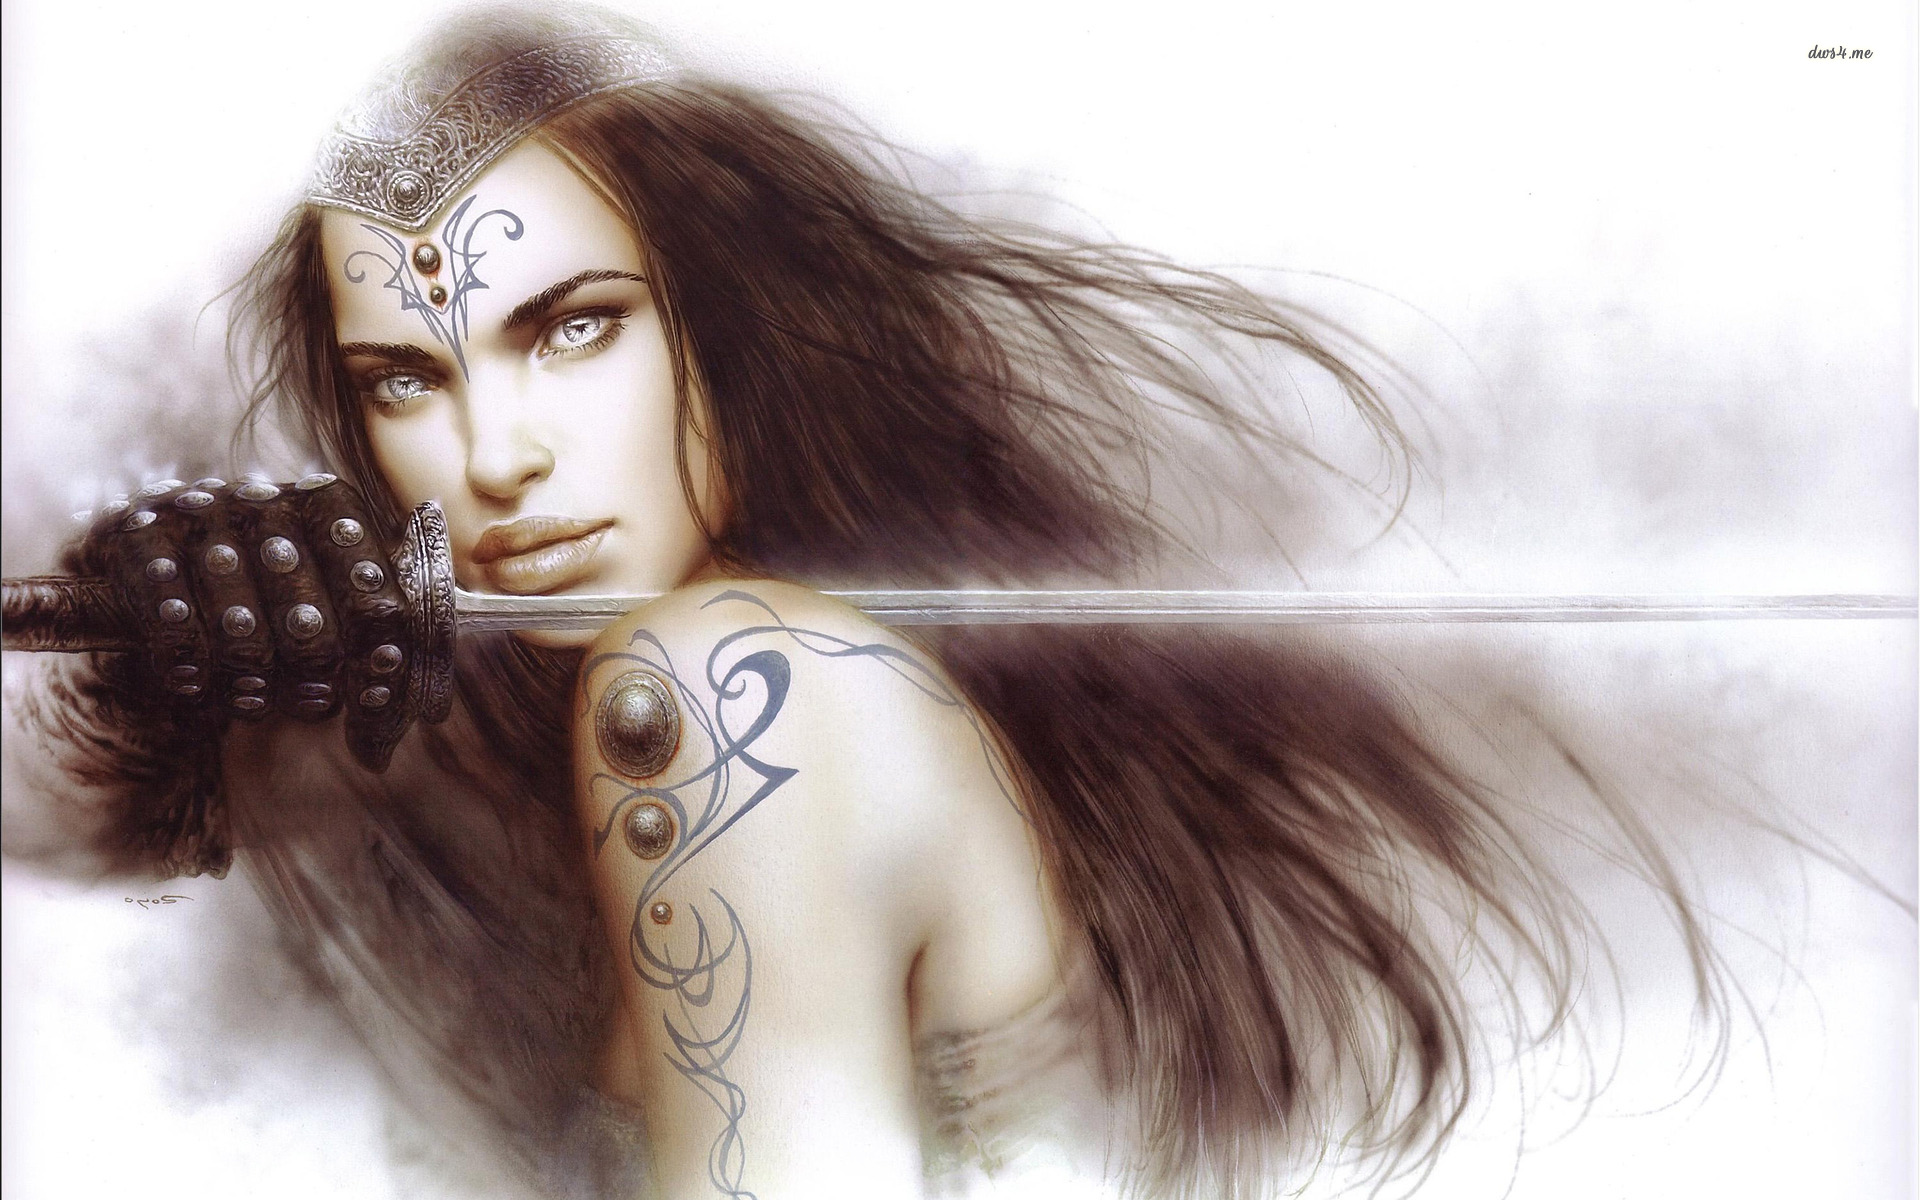 Woman warrior wallpaper - Fantasy wallpapers -